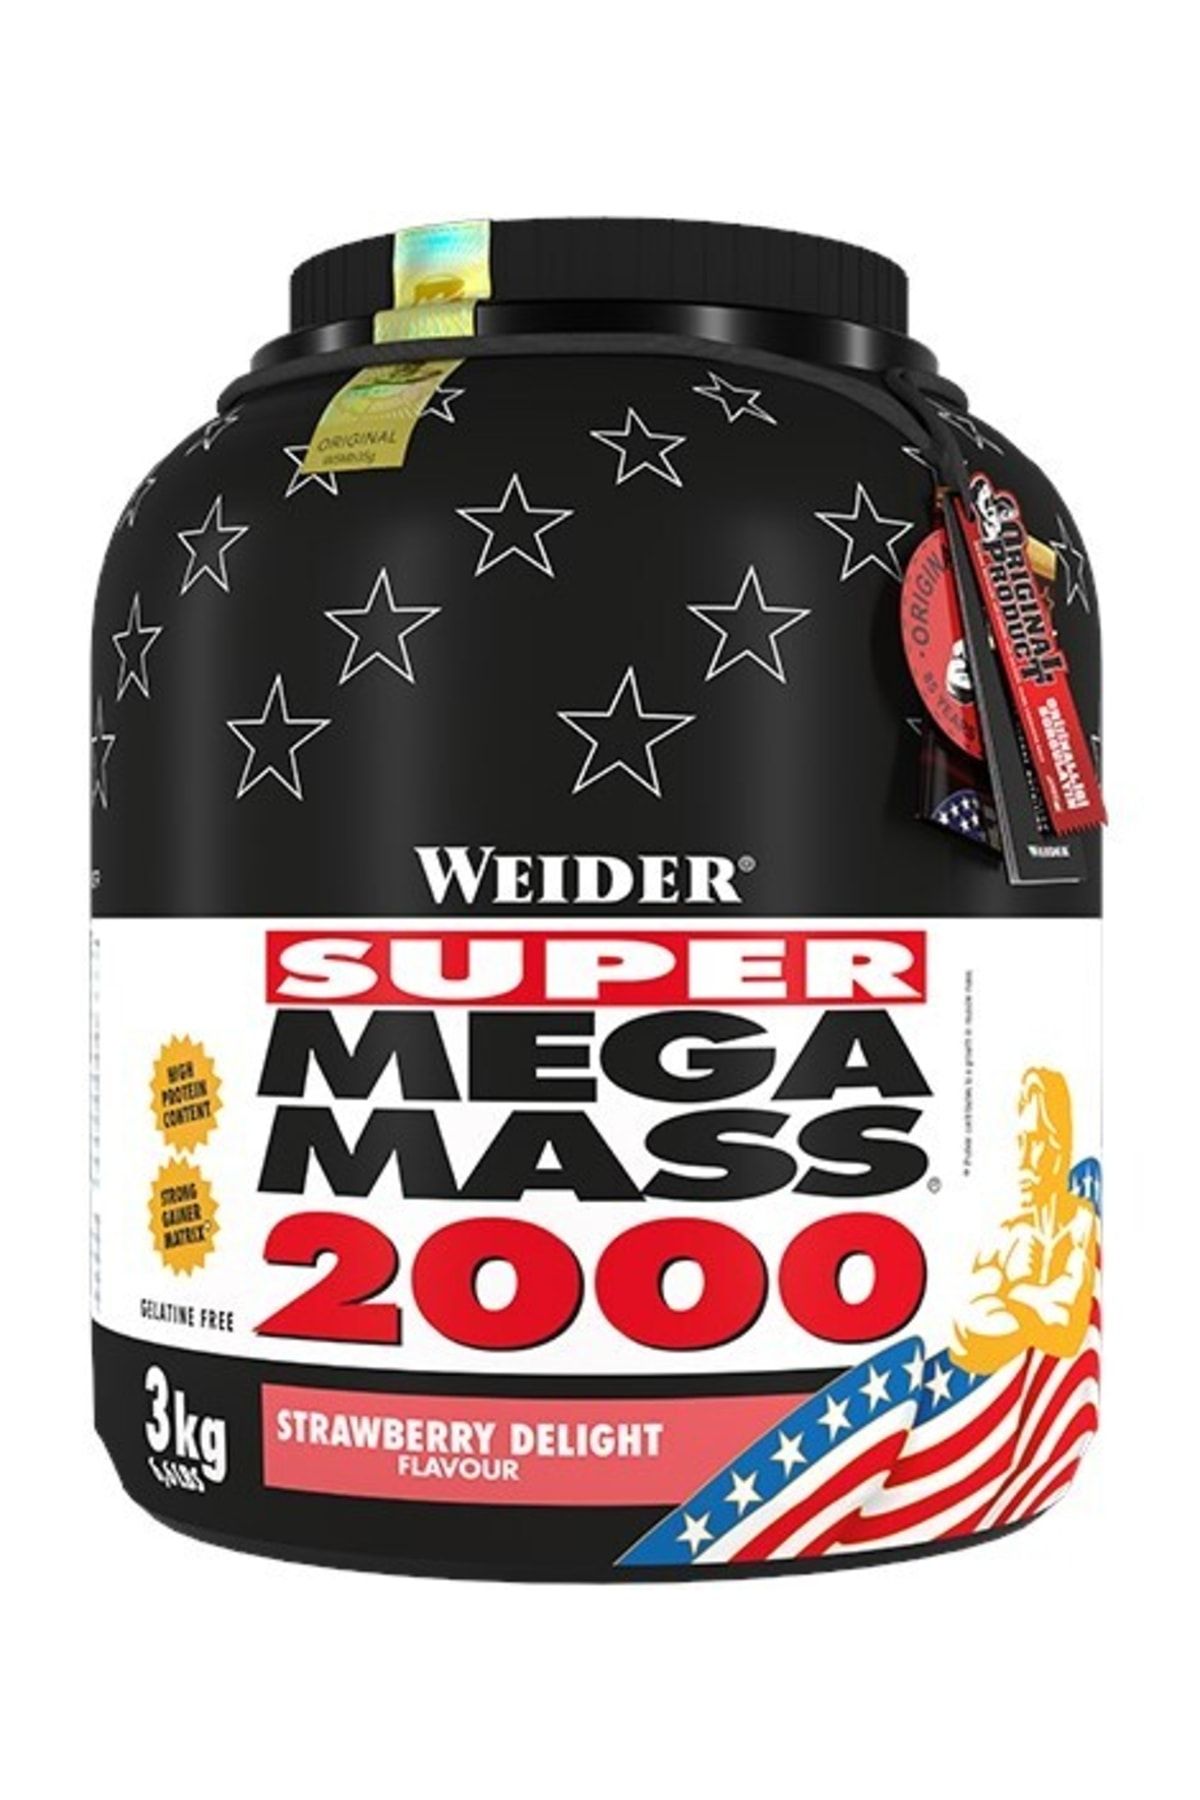 Weider Super Mega Mass 2000 3 Kg